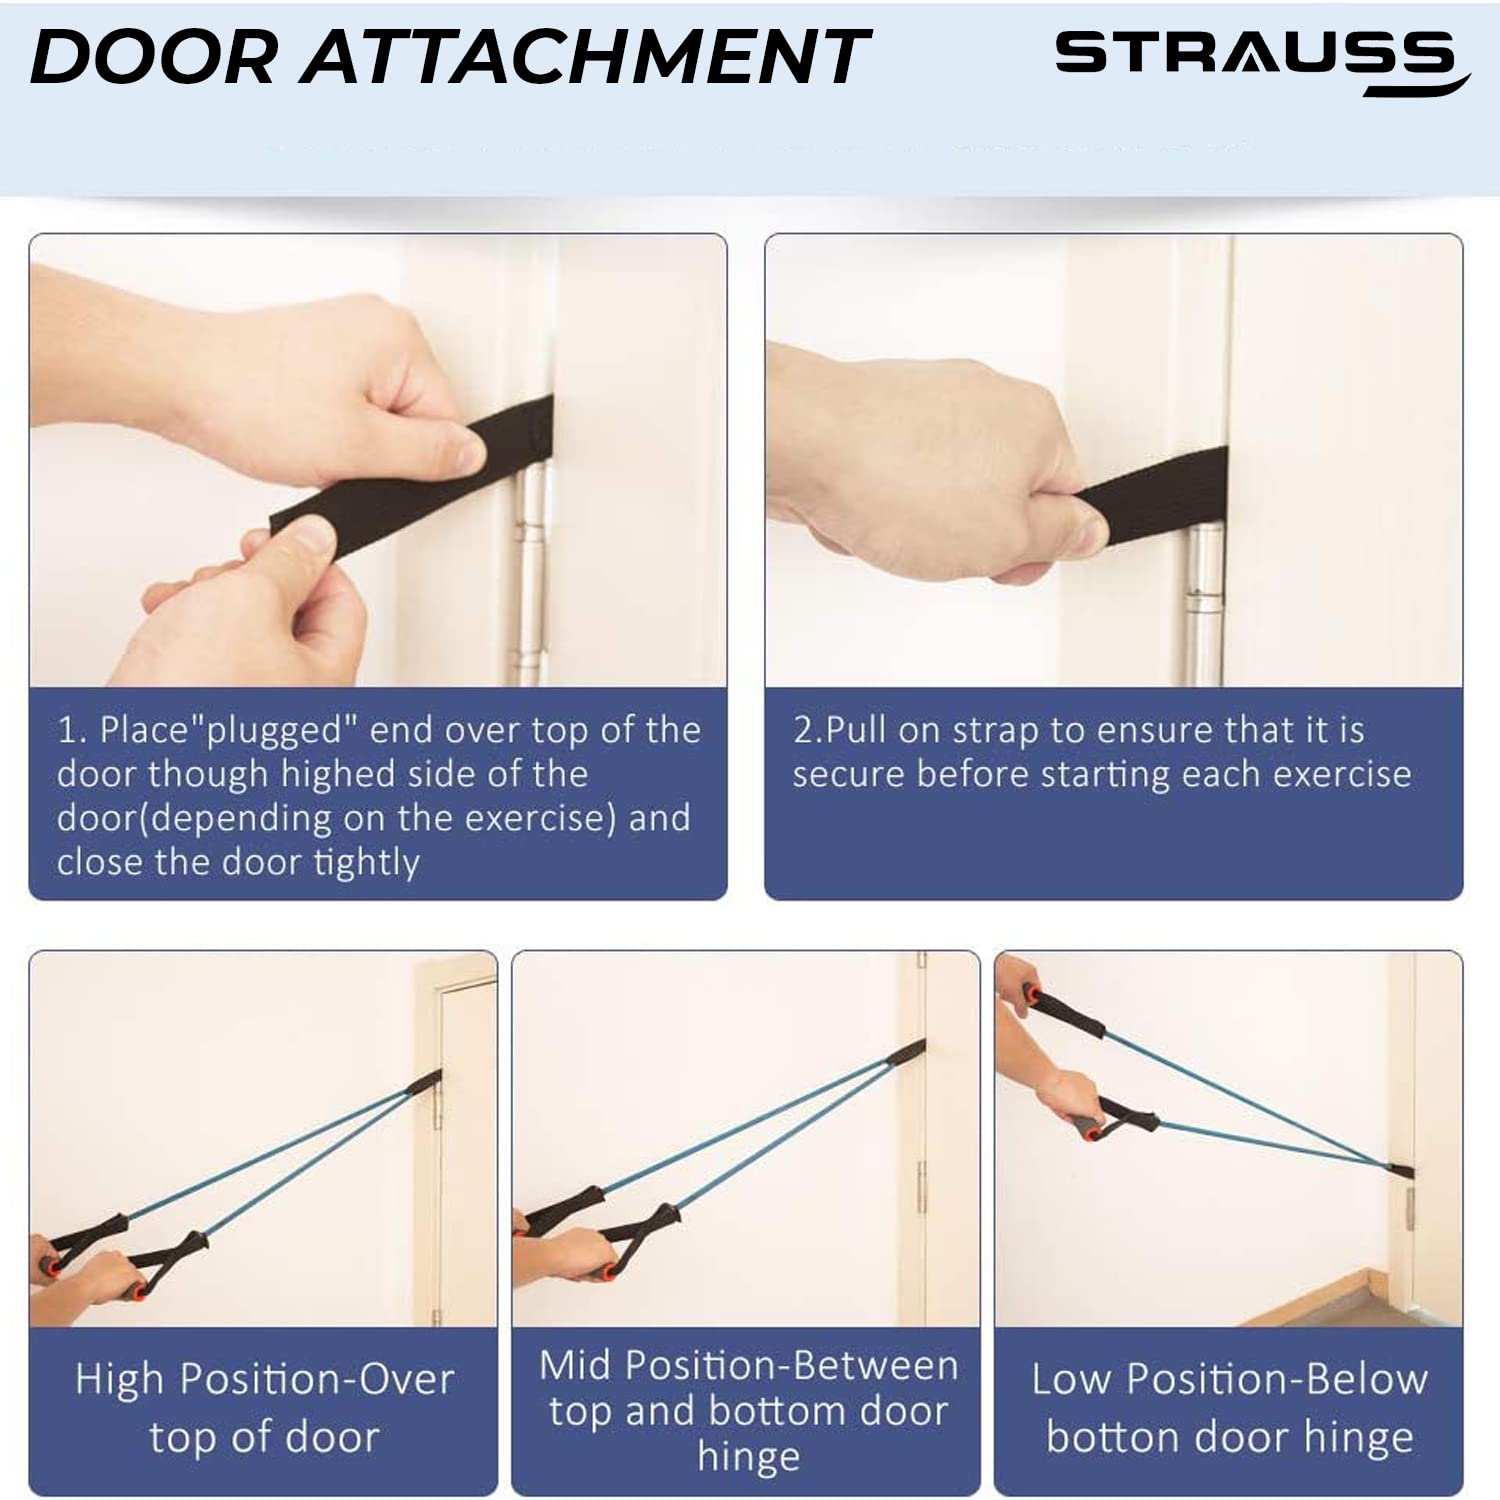 Strauss Triple Resistance Tube with PVC Handles, Door Knob & Carry Bag, 40 Kg, (Black)